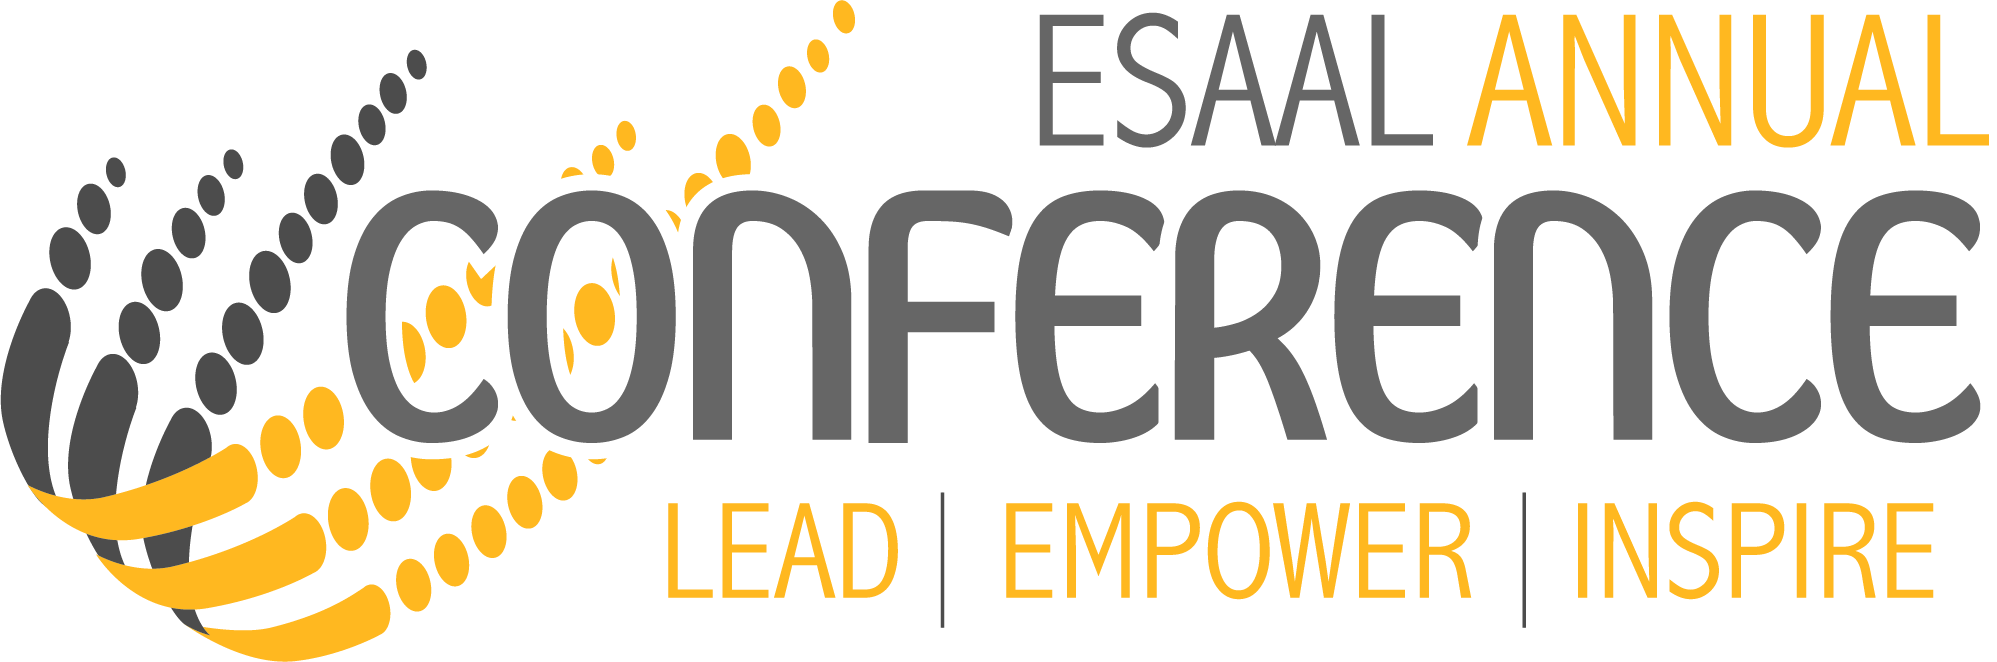 Esaal Conference Logo